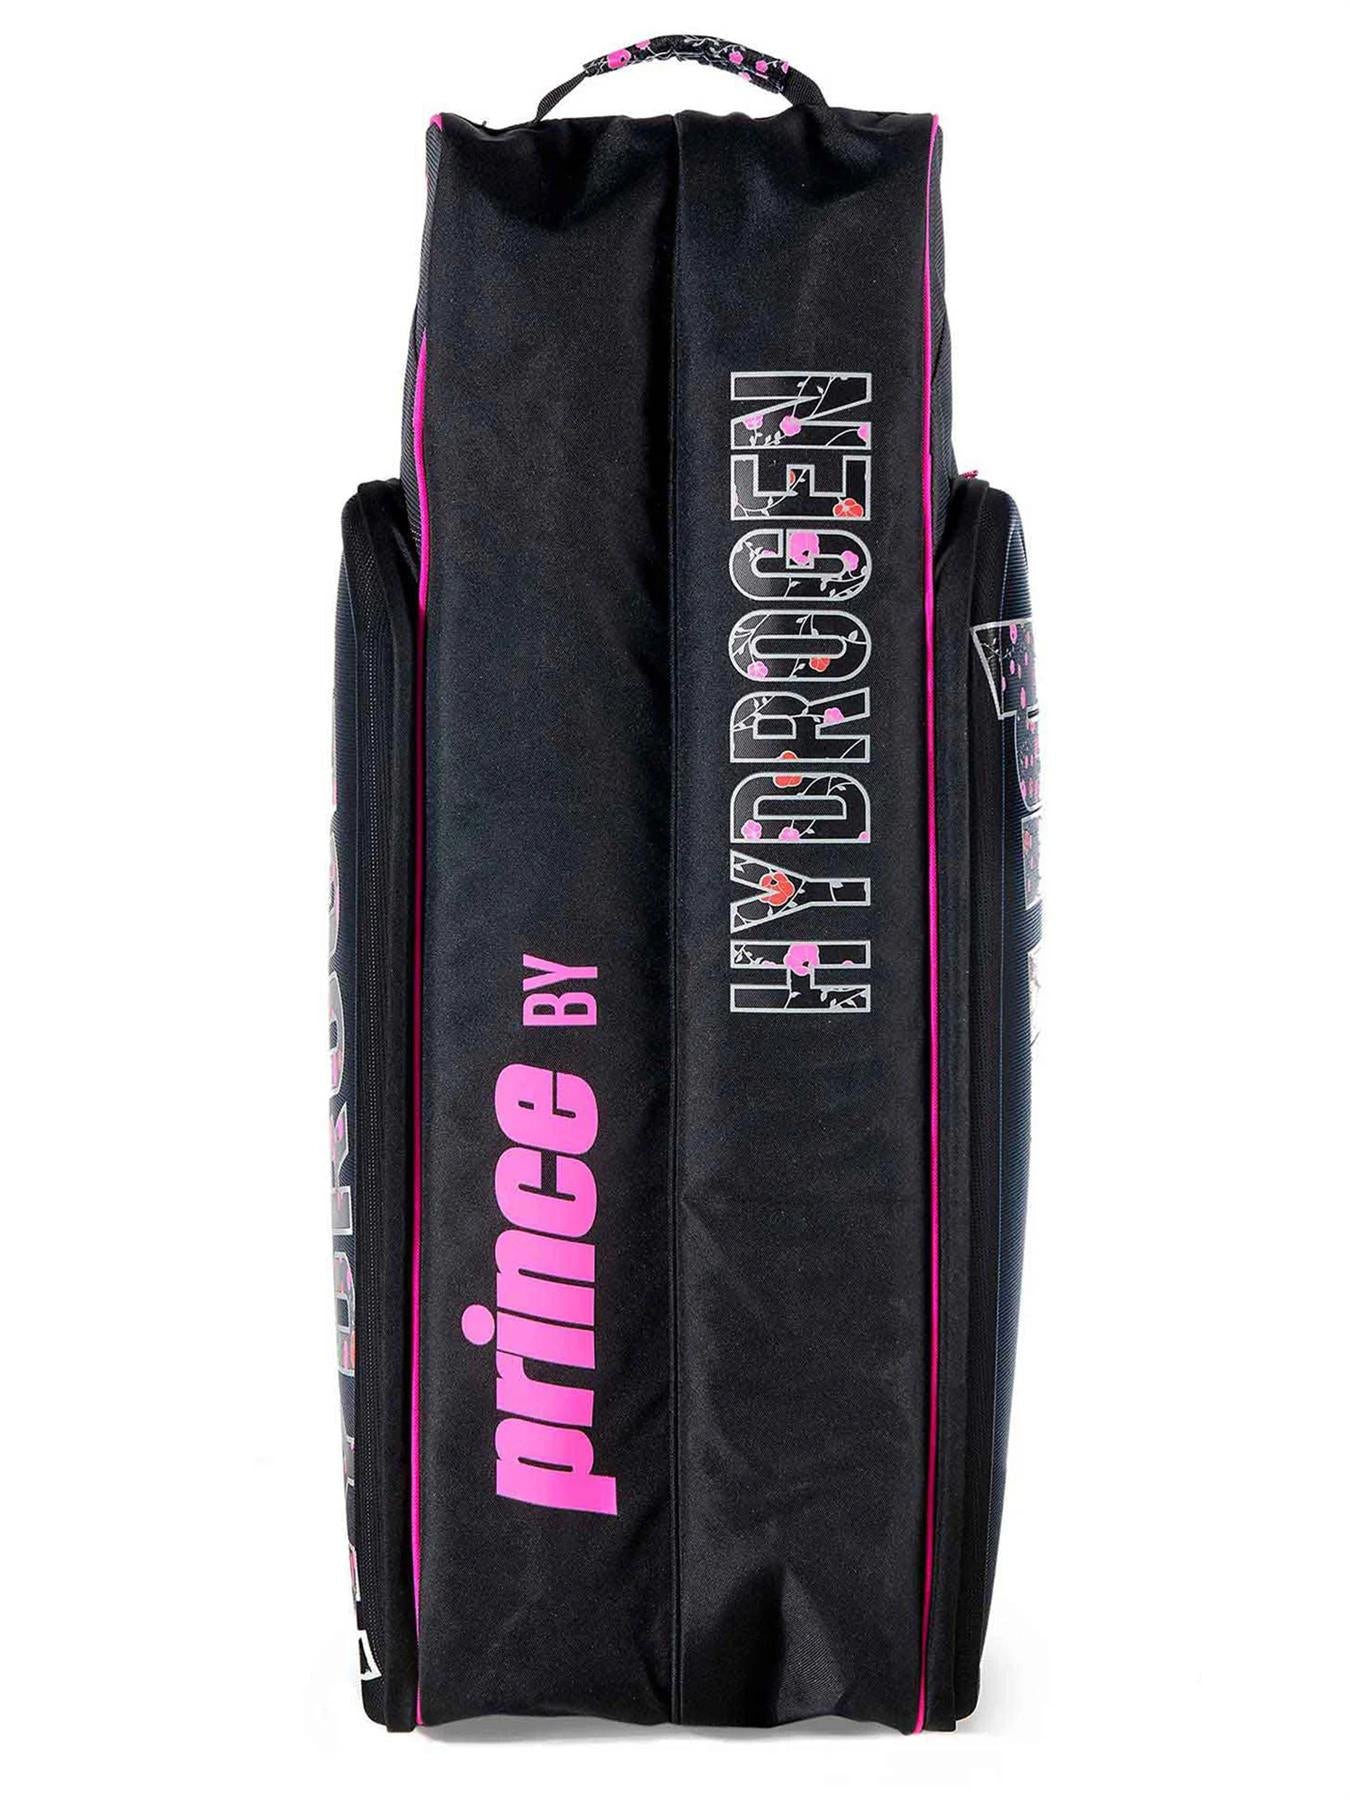 Prince Hydrogen Lady Mary 6 Racket Tennis Bag - Black / Pink